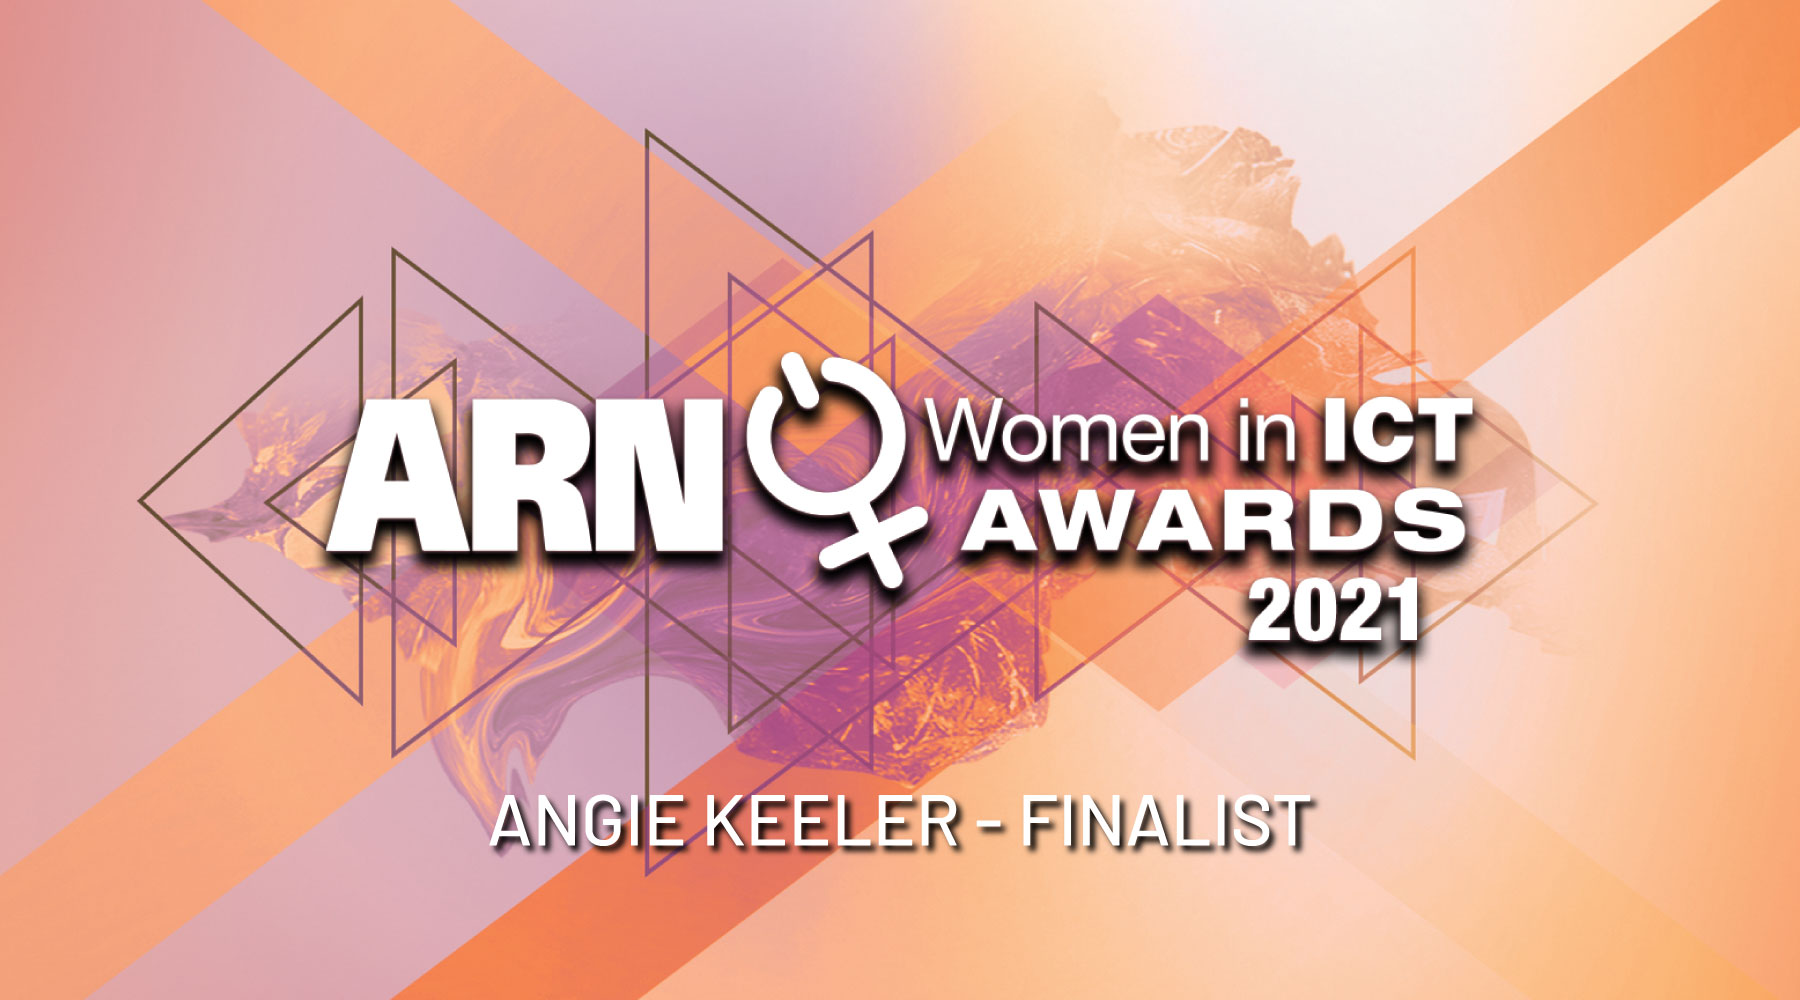 Awards_ARN-Women-in-ICT-Awards-2021